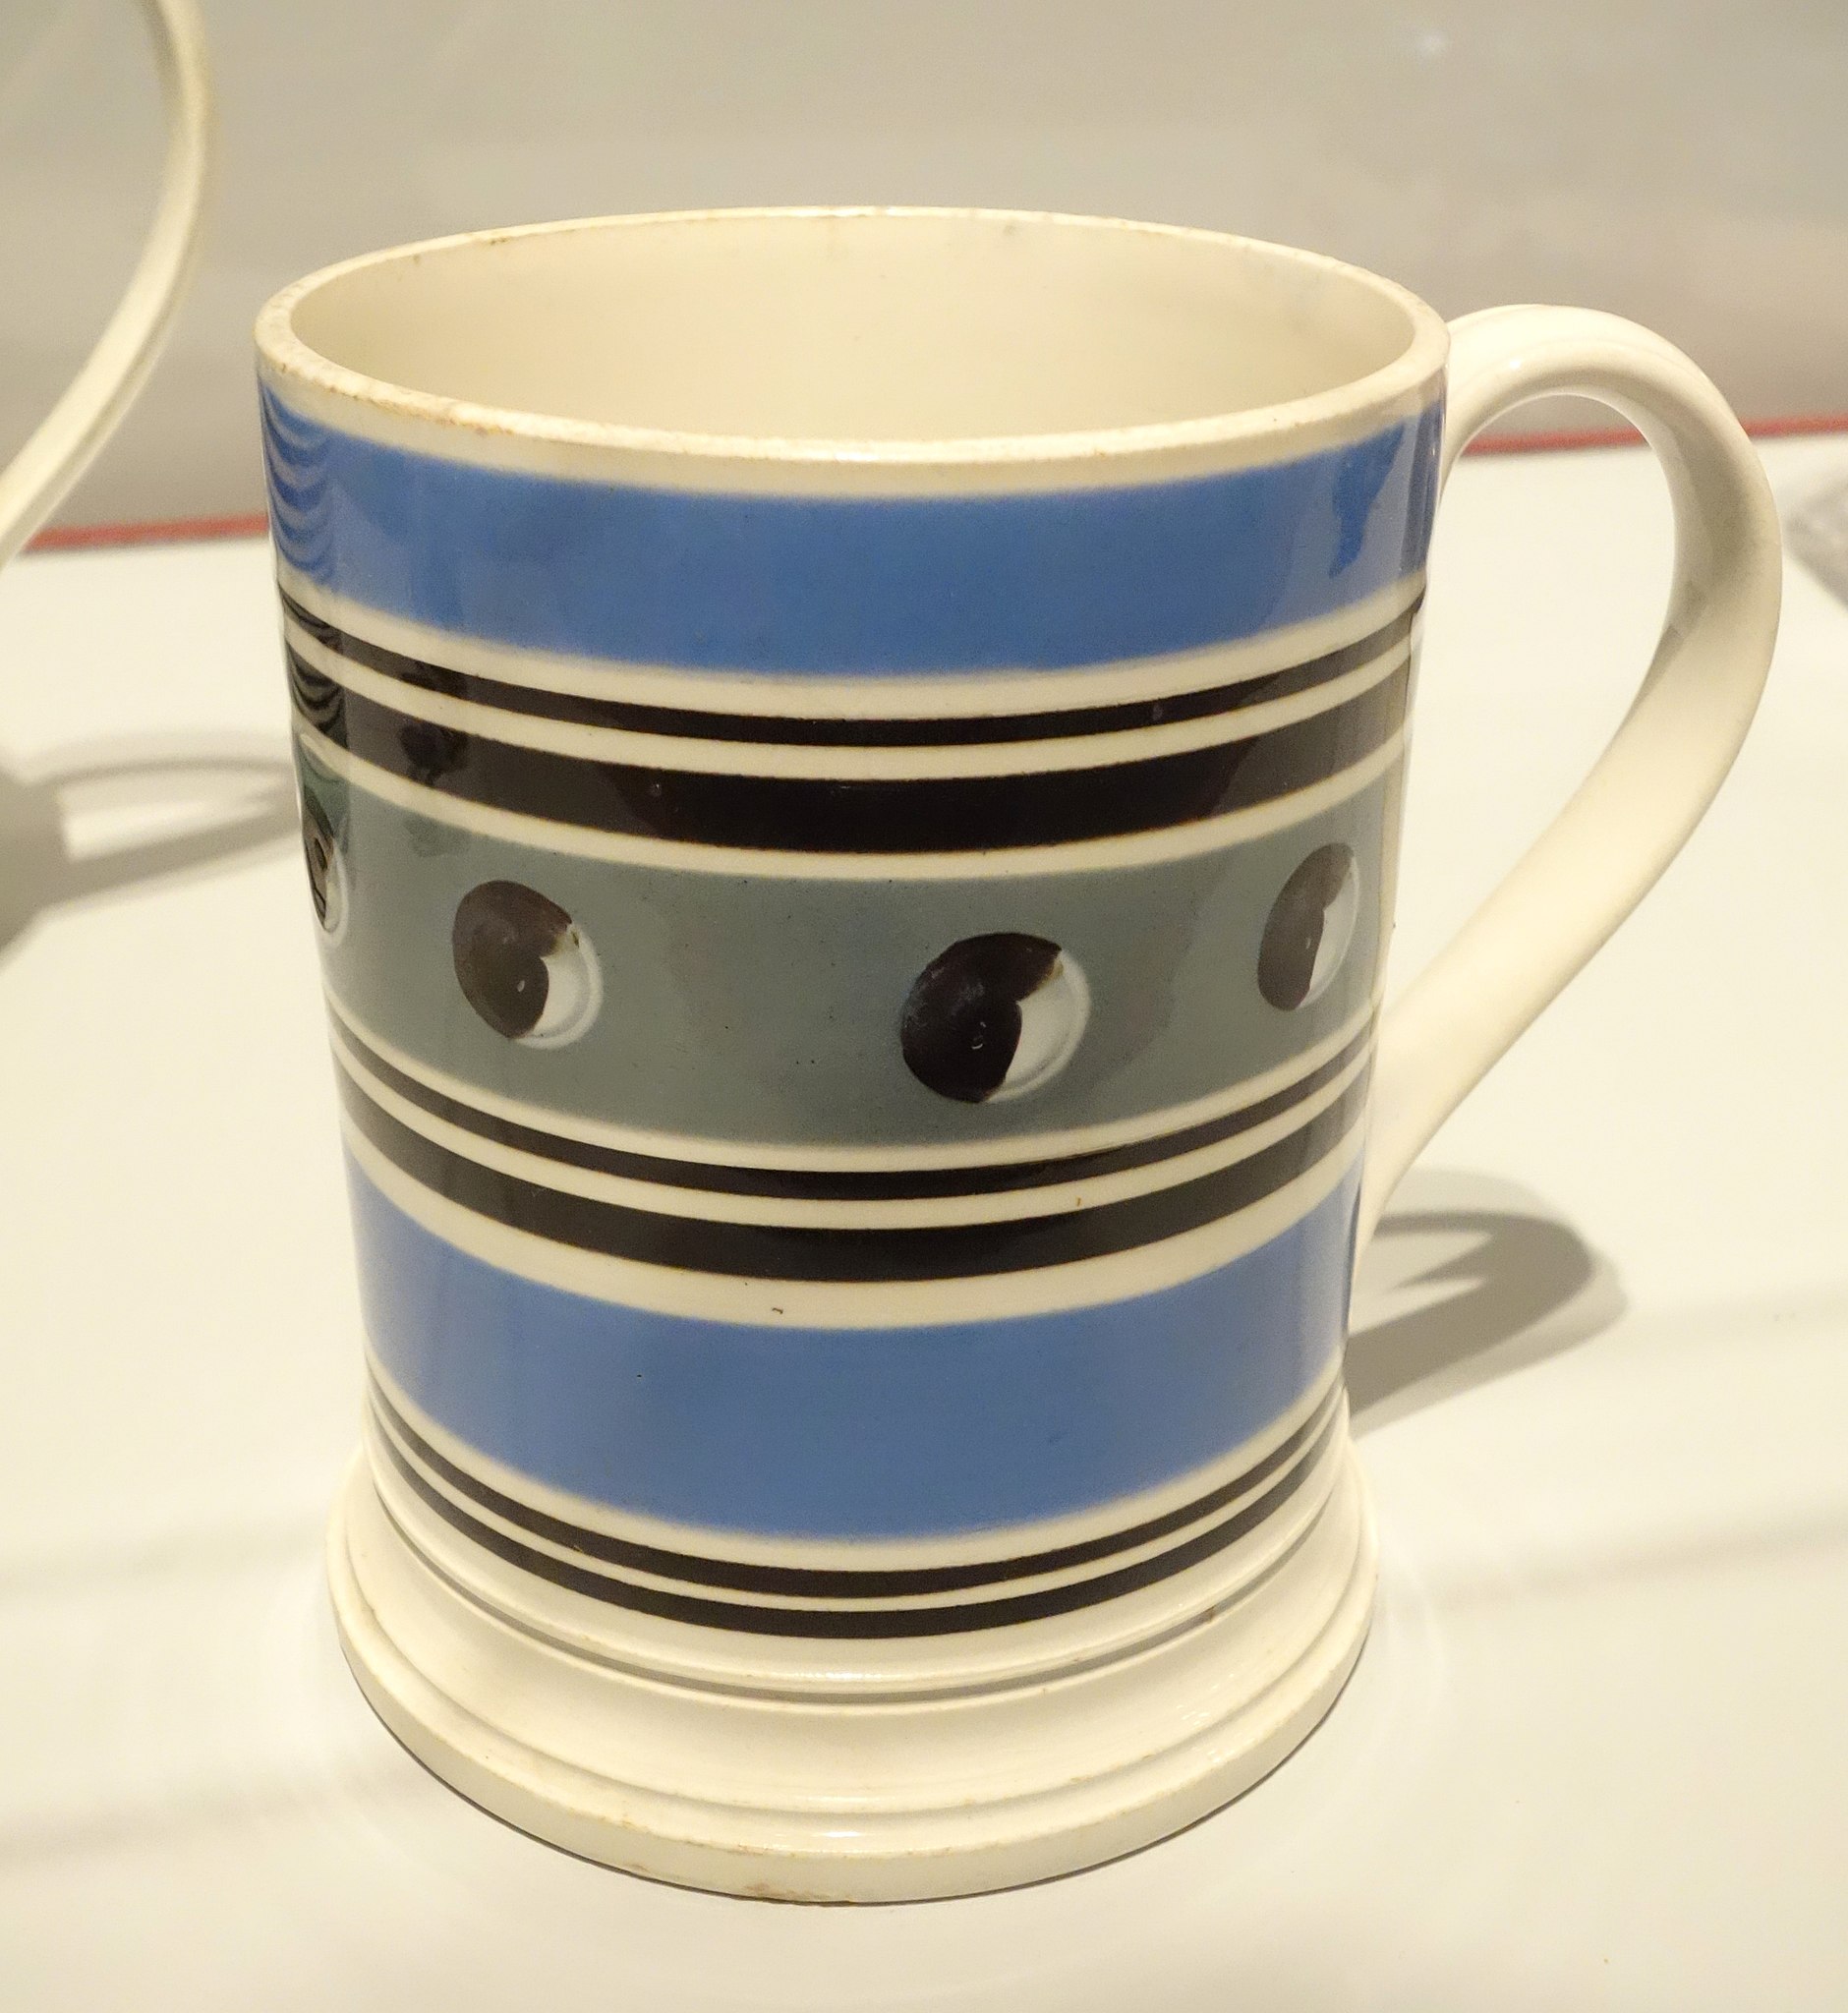 File:Paper cup making machine.jpg - Wikimedia Commons